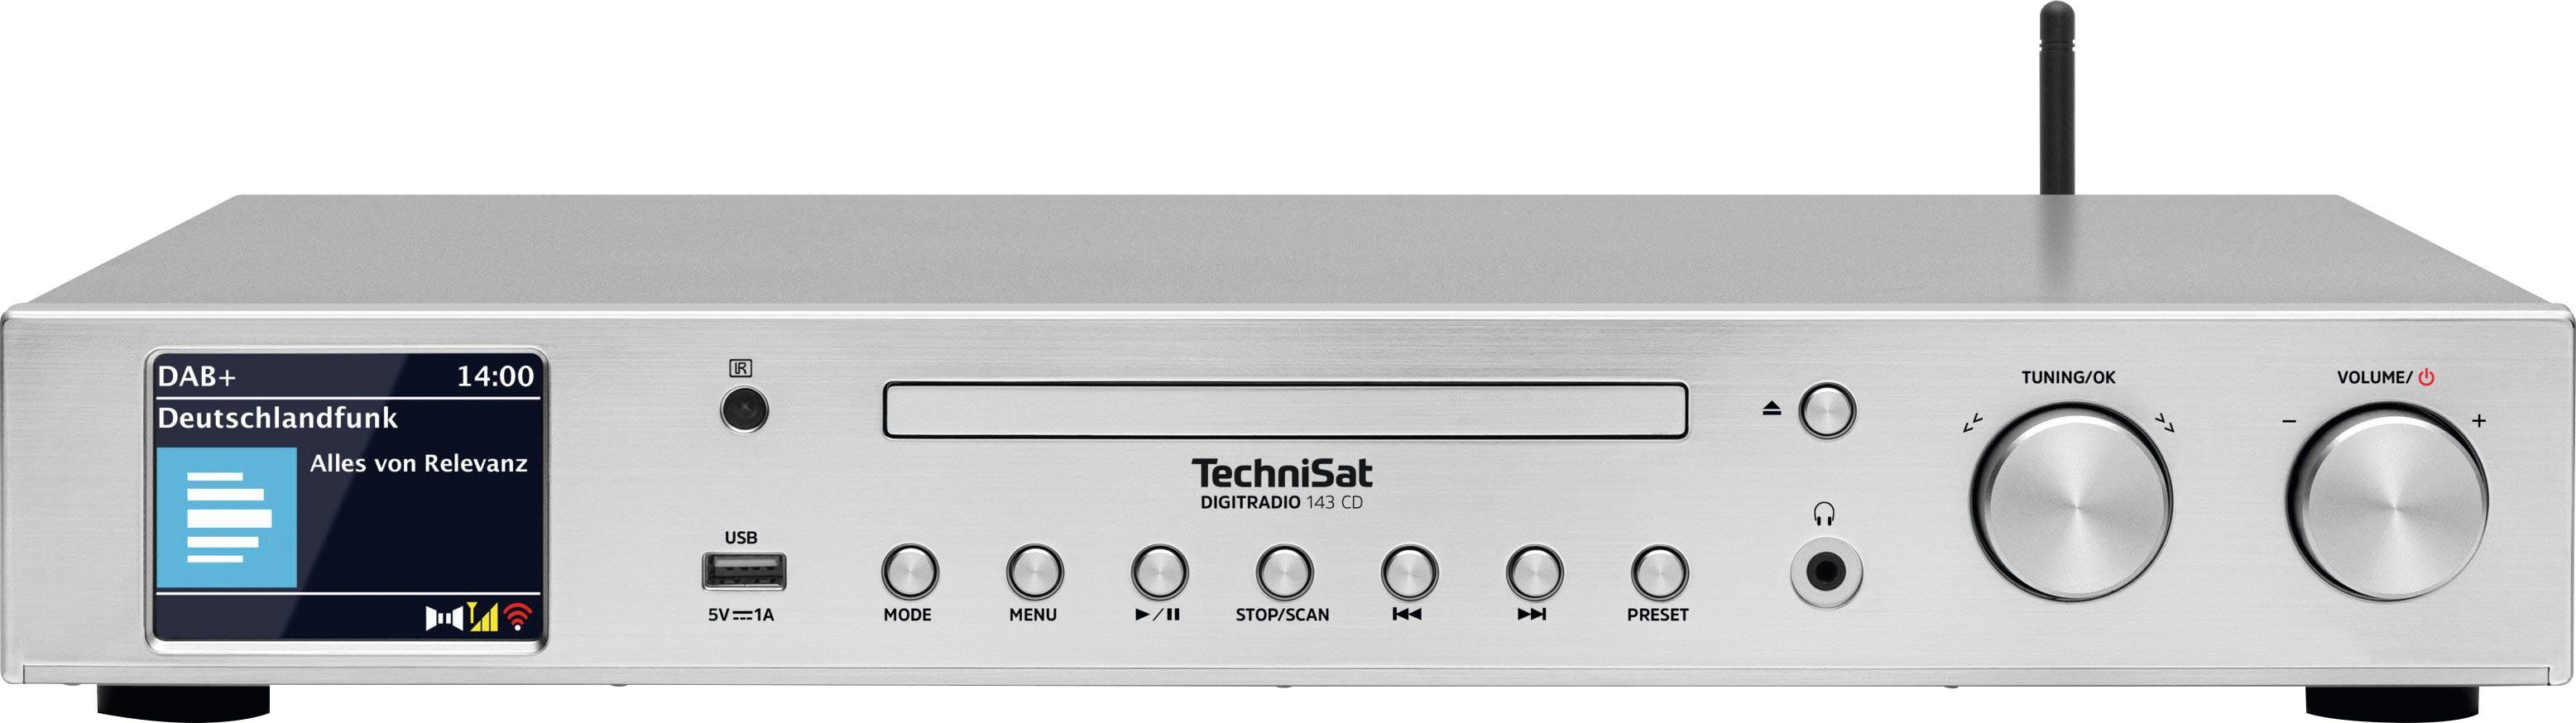 (Digitalradio (DAB) Digitalradio Internetradio, CD DIGITRADIO (DAB), UKW silber 143 (V3) RDS) mit TechniSat